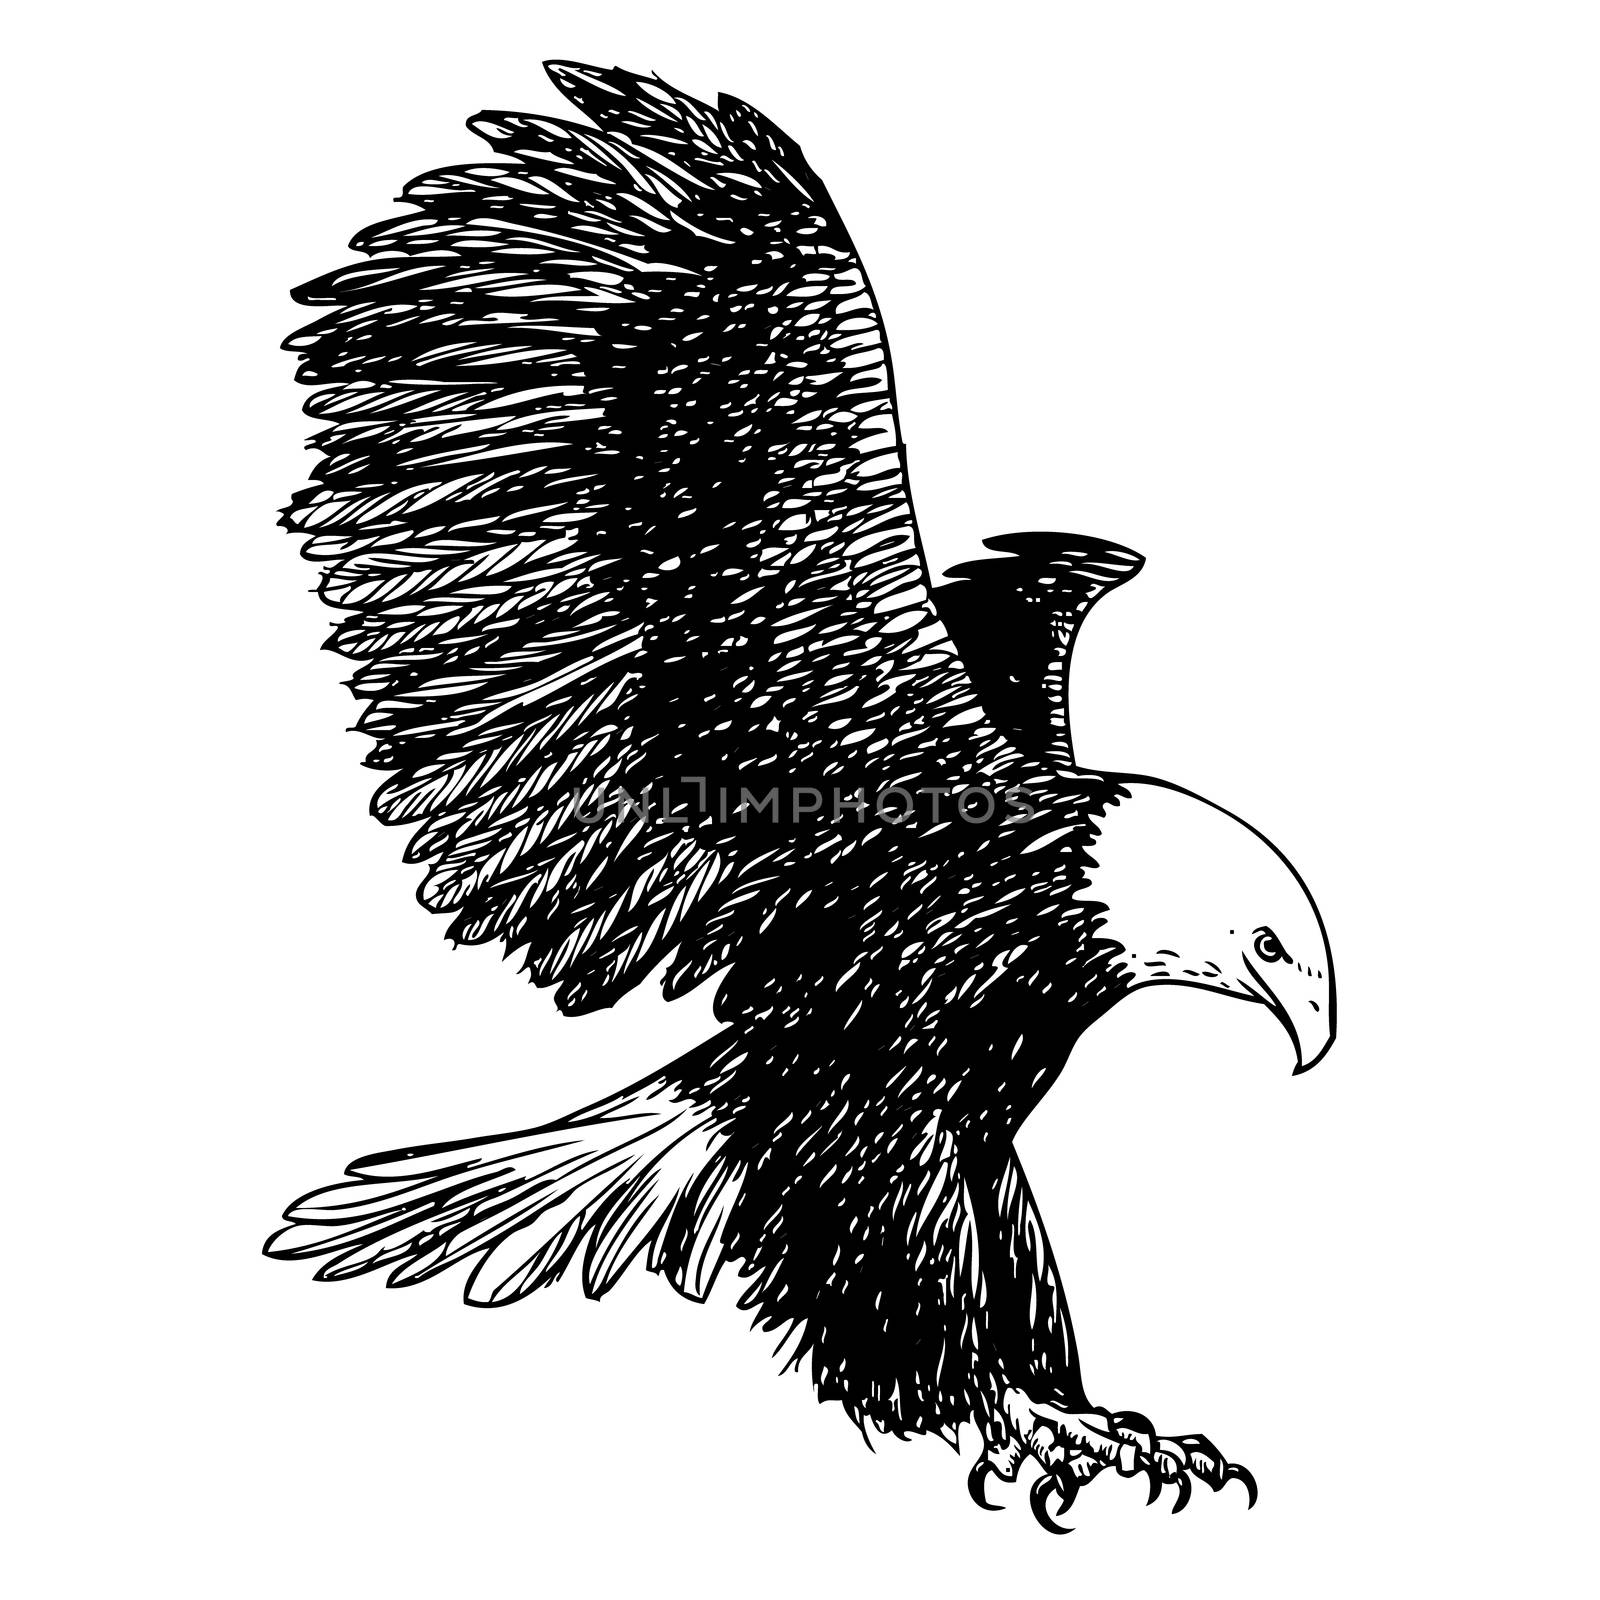 freehand sketch illustration of eagle, hawk bird doodle hand drawn